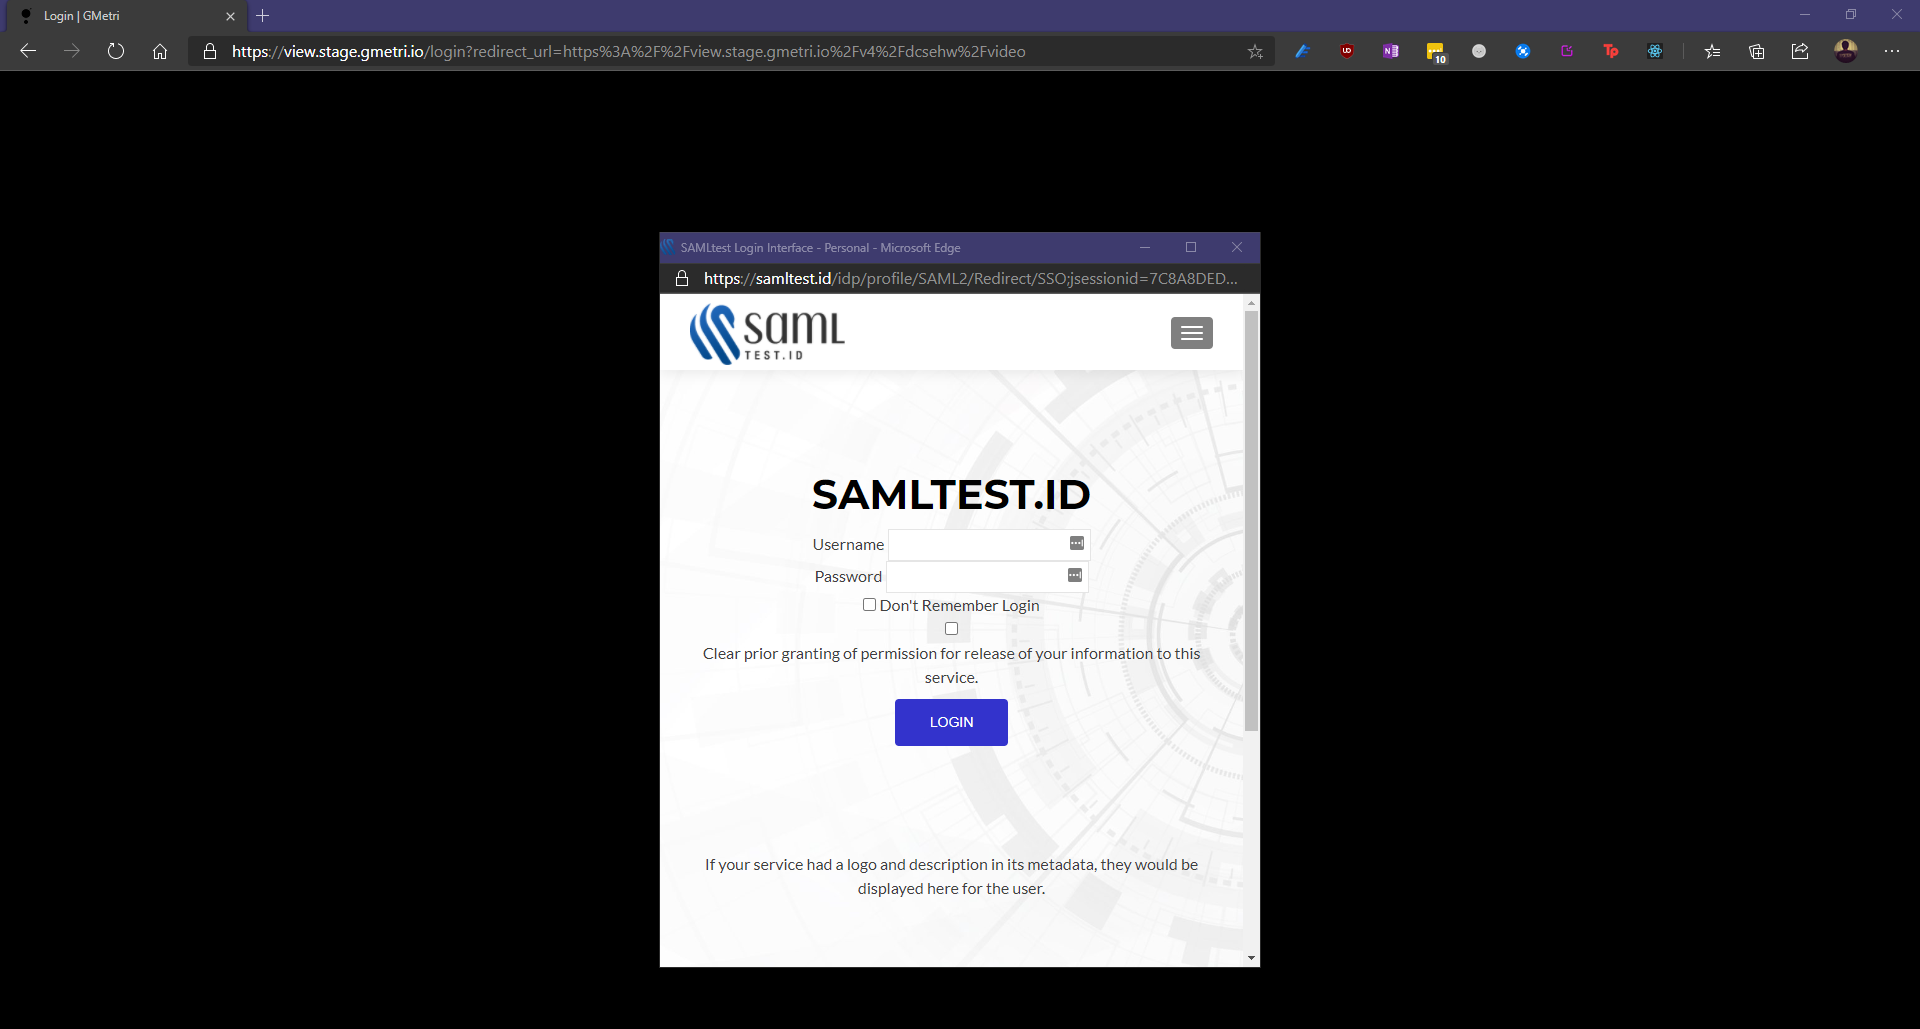 SAML viewer IdP login